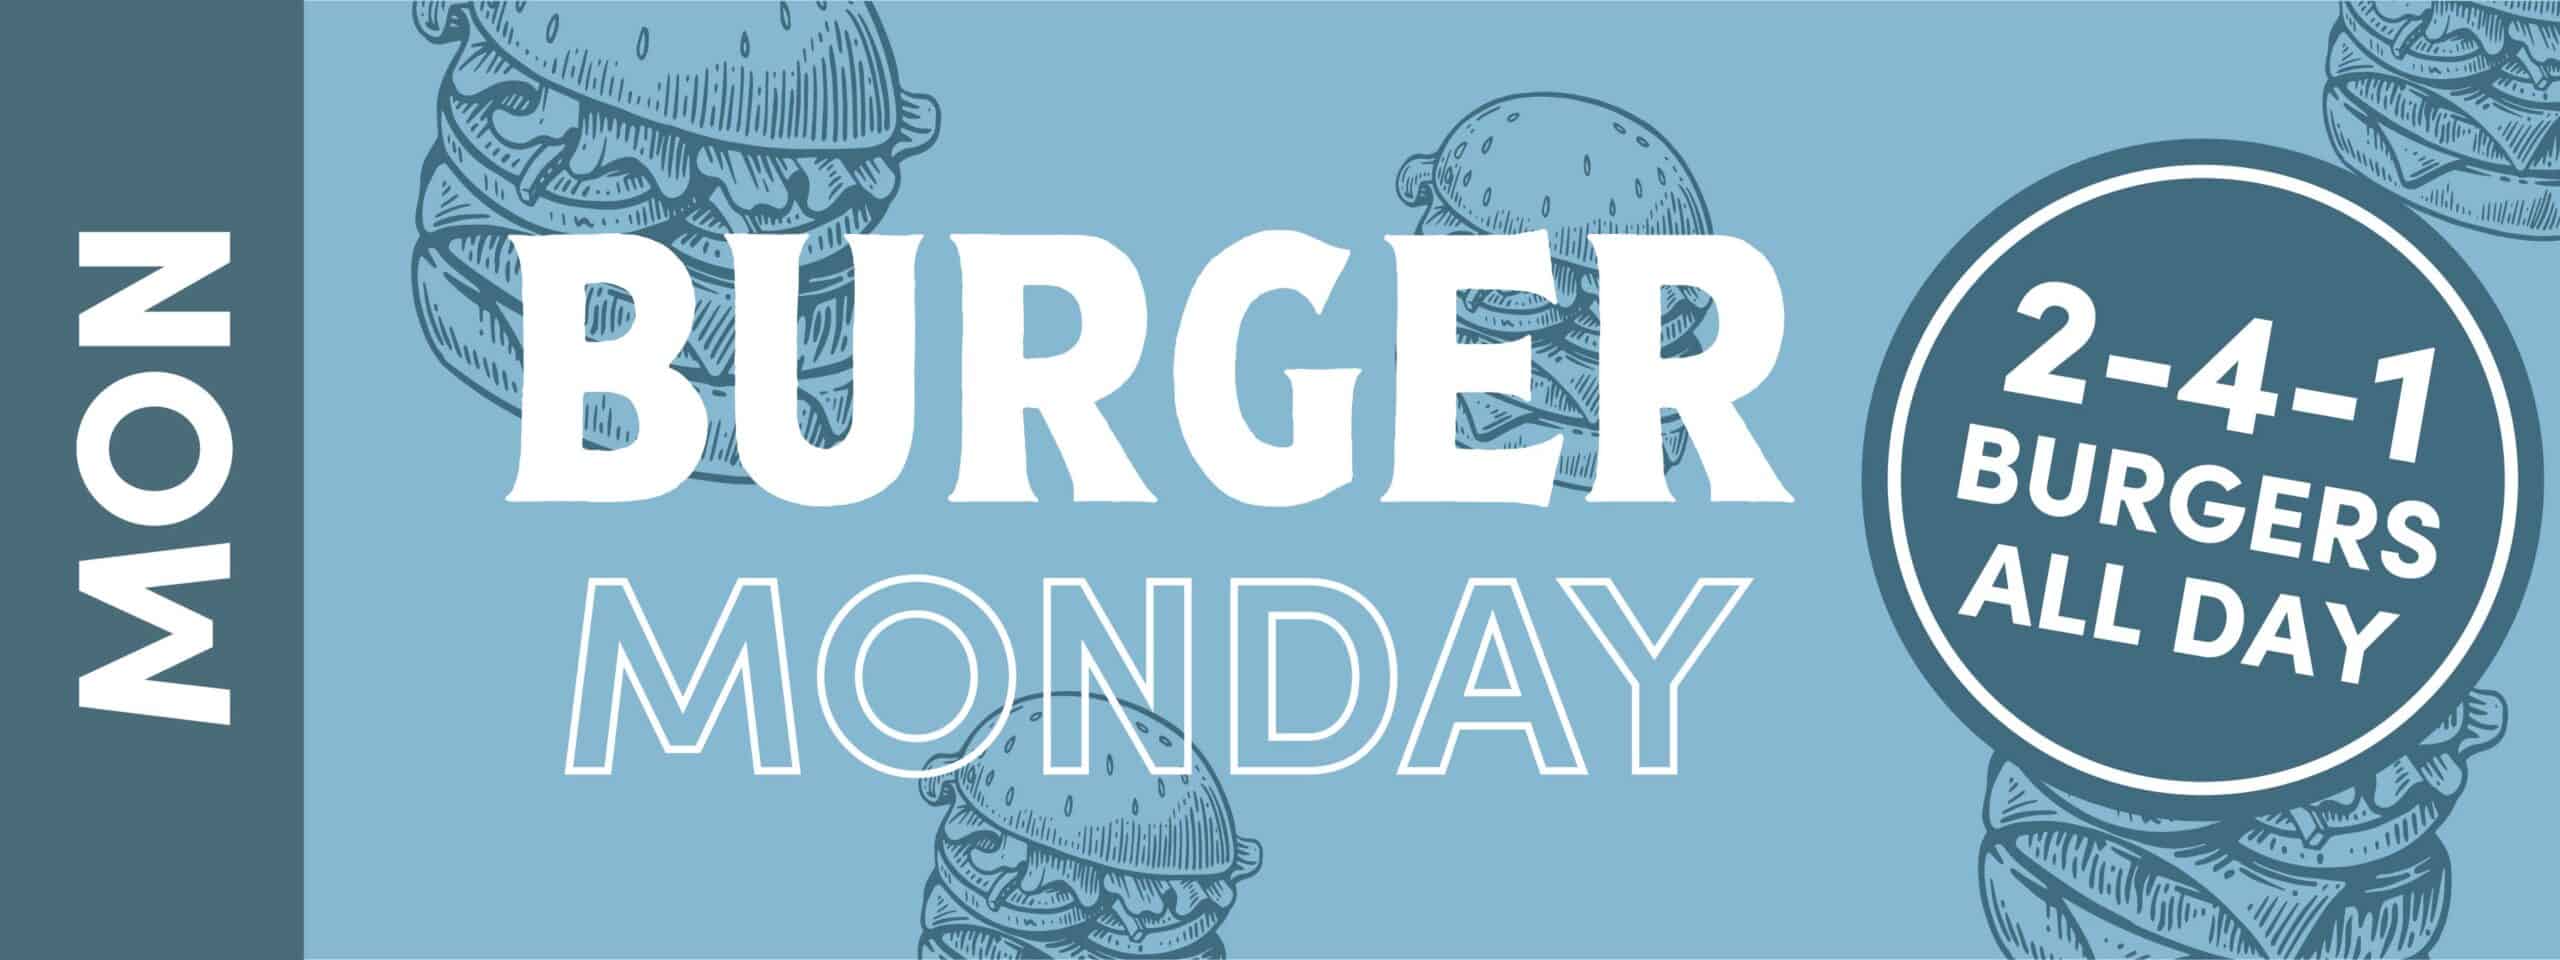 Burger Mondays 2for1 offer